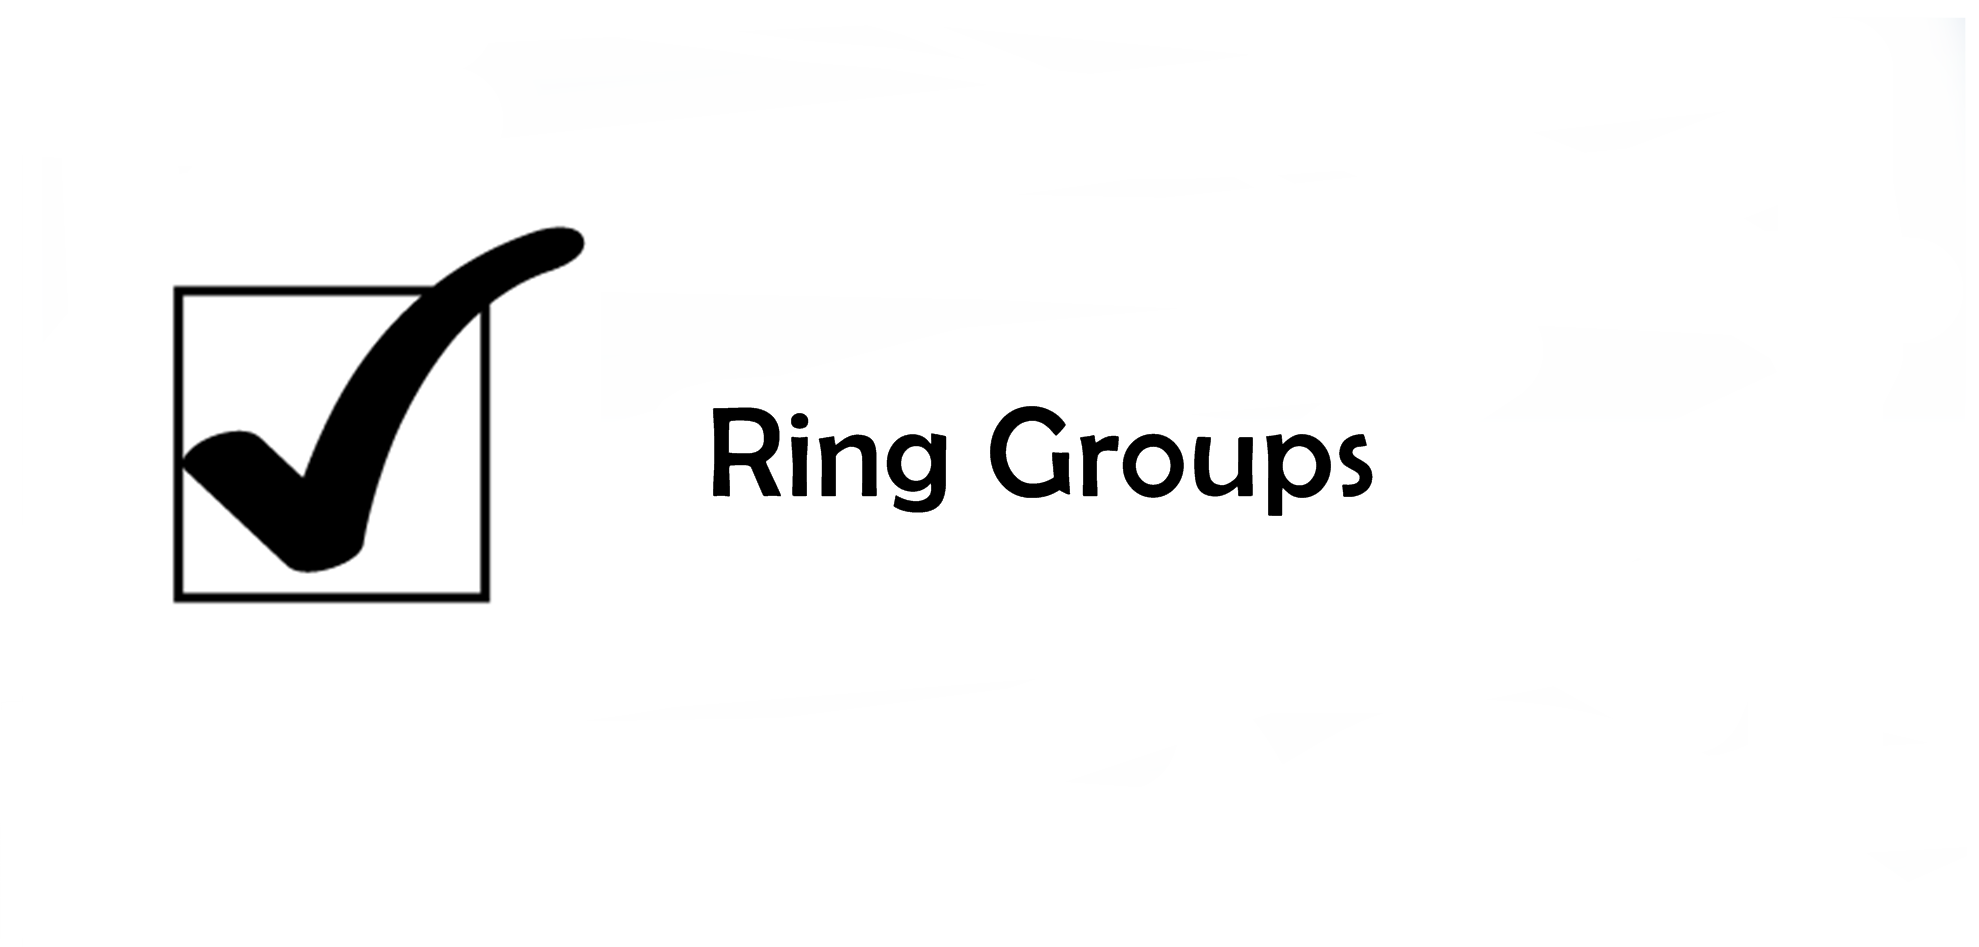 Ring Groups